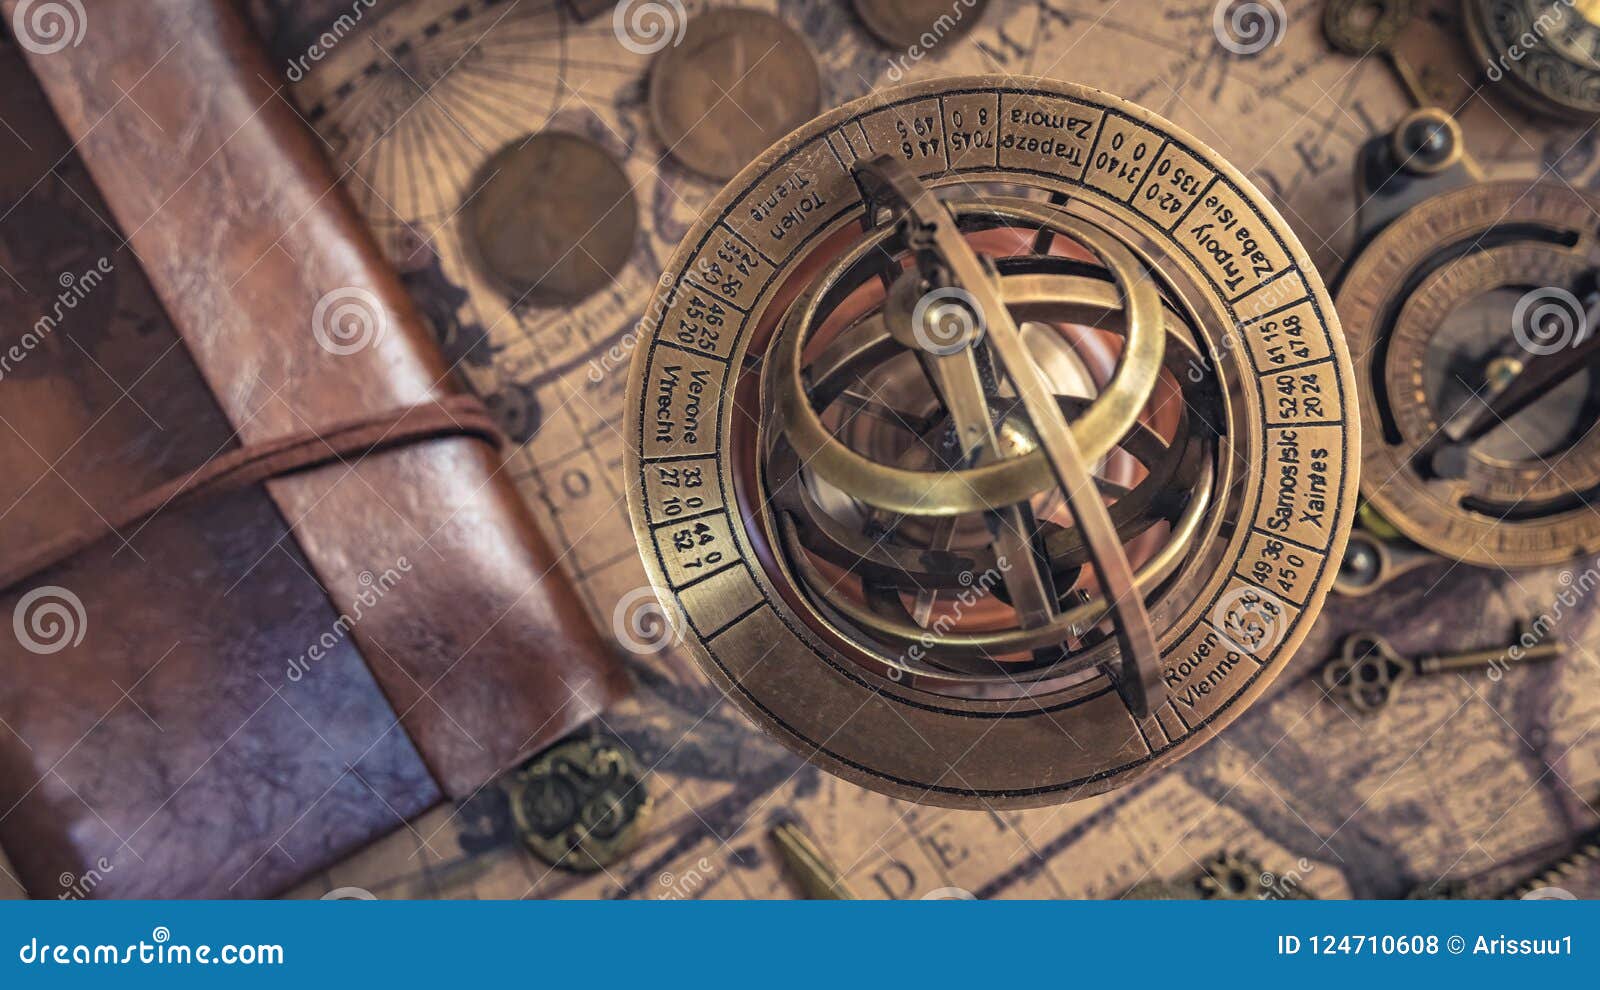 Antique Brass Nautical Sundial Compass Stock Photo - Image of longitude,  grunge: 124710608